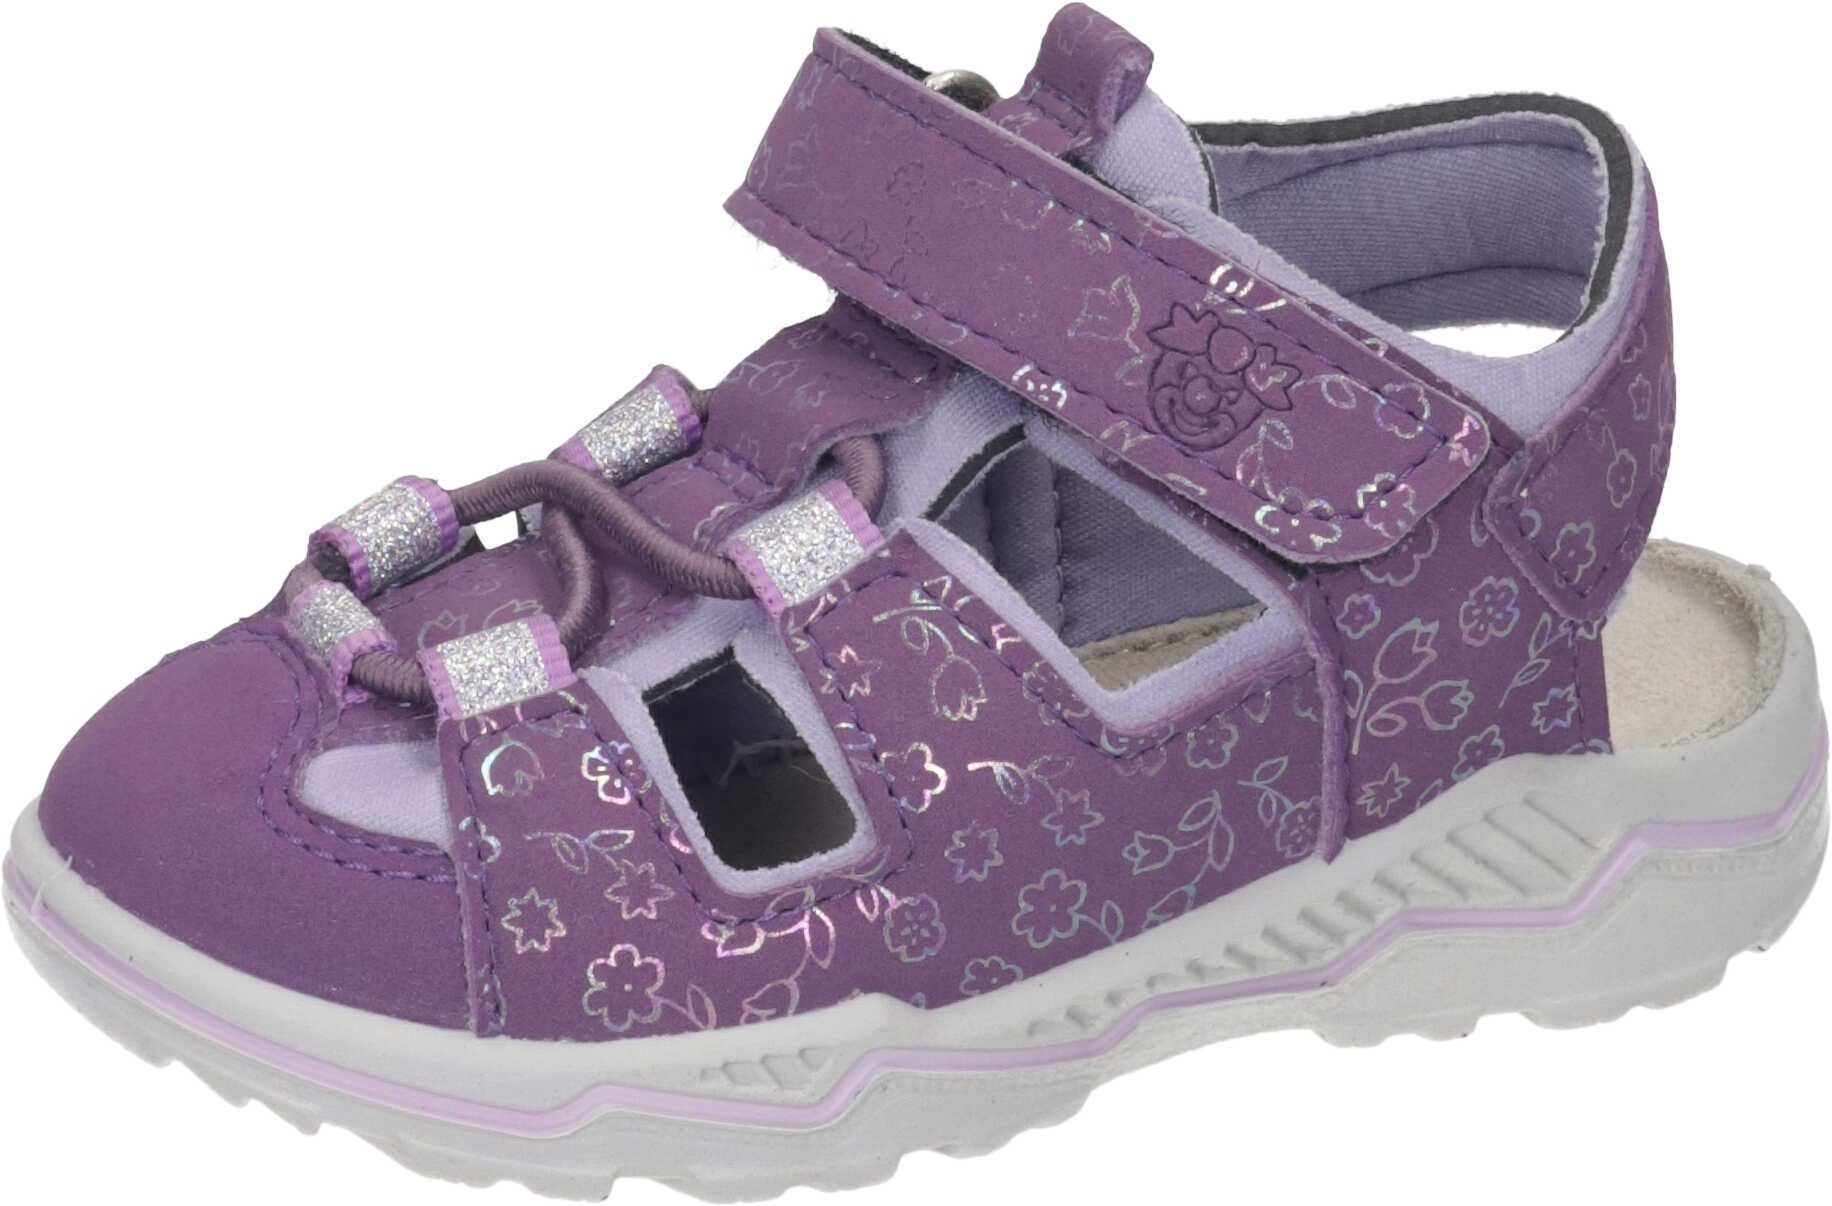 Pepino Outdoorsandale Sandaletten Synthetik/Textil aus Cassis/Lavendel